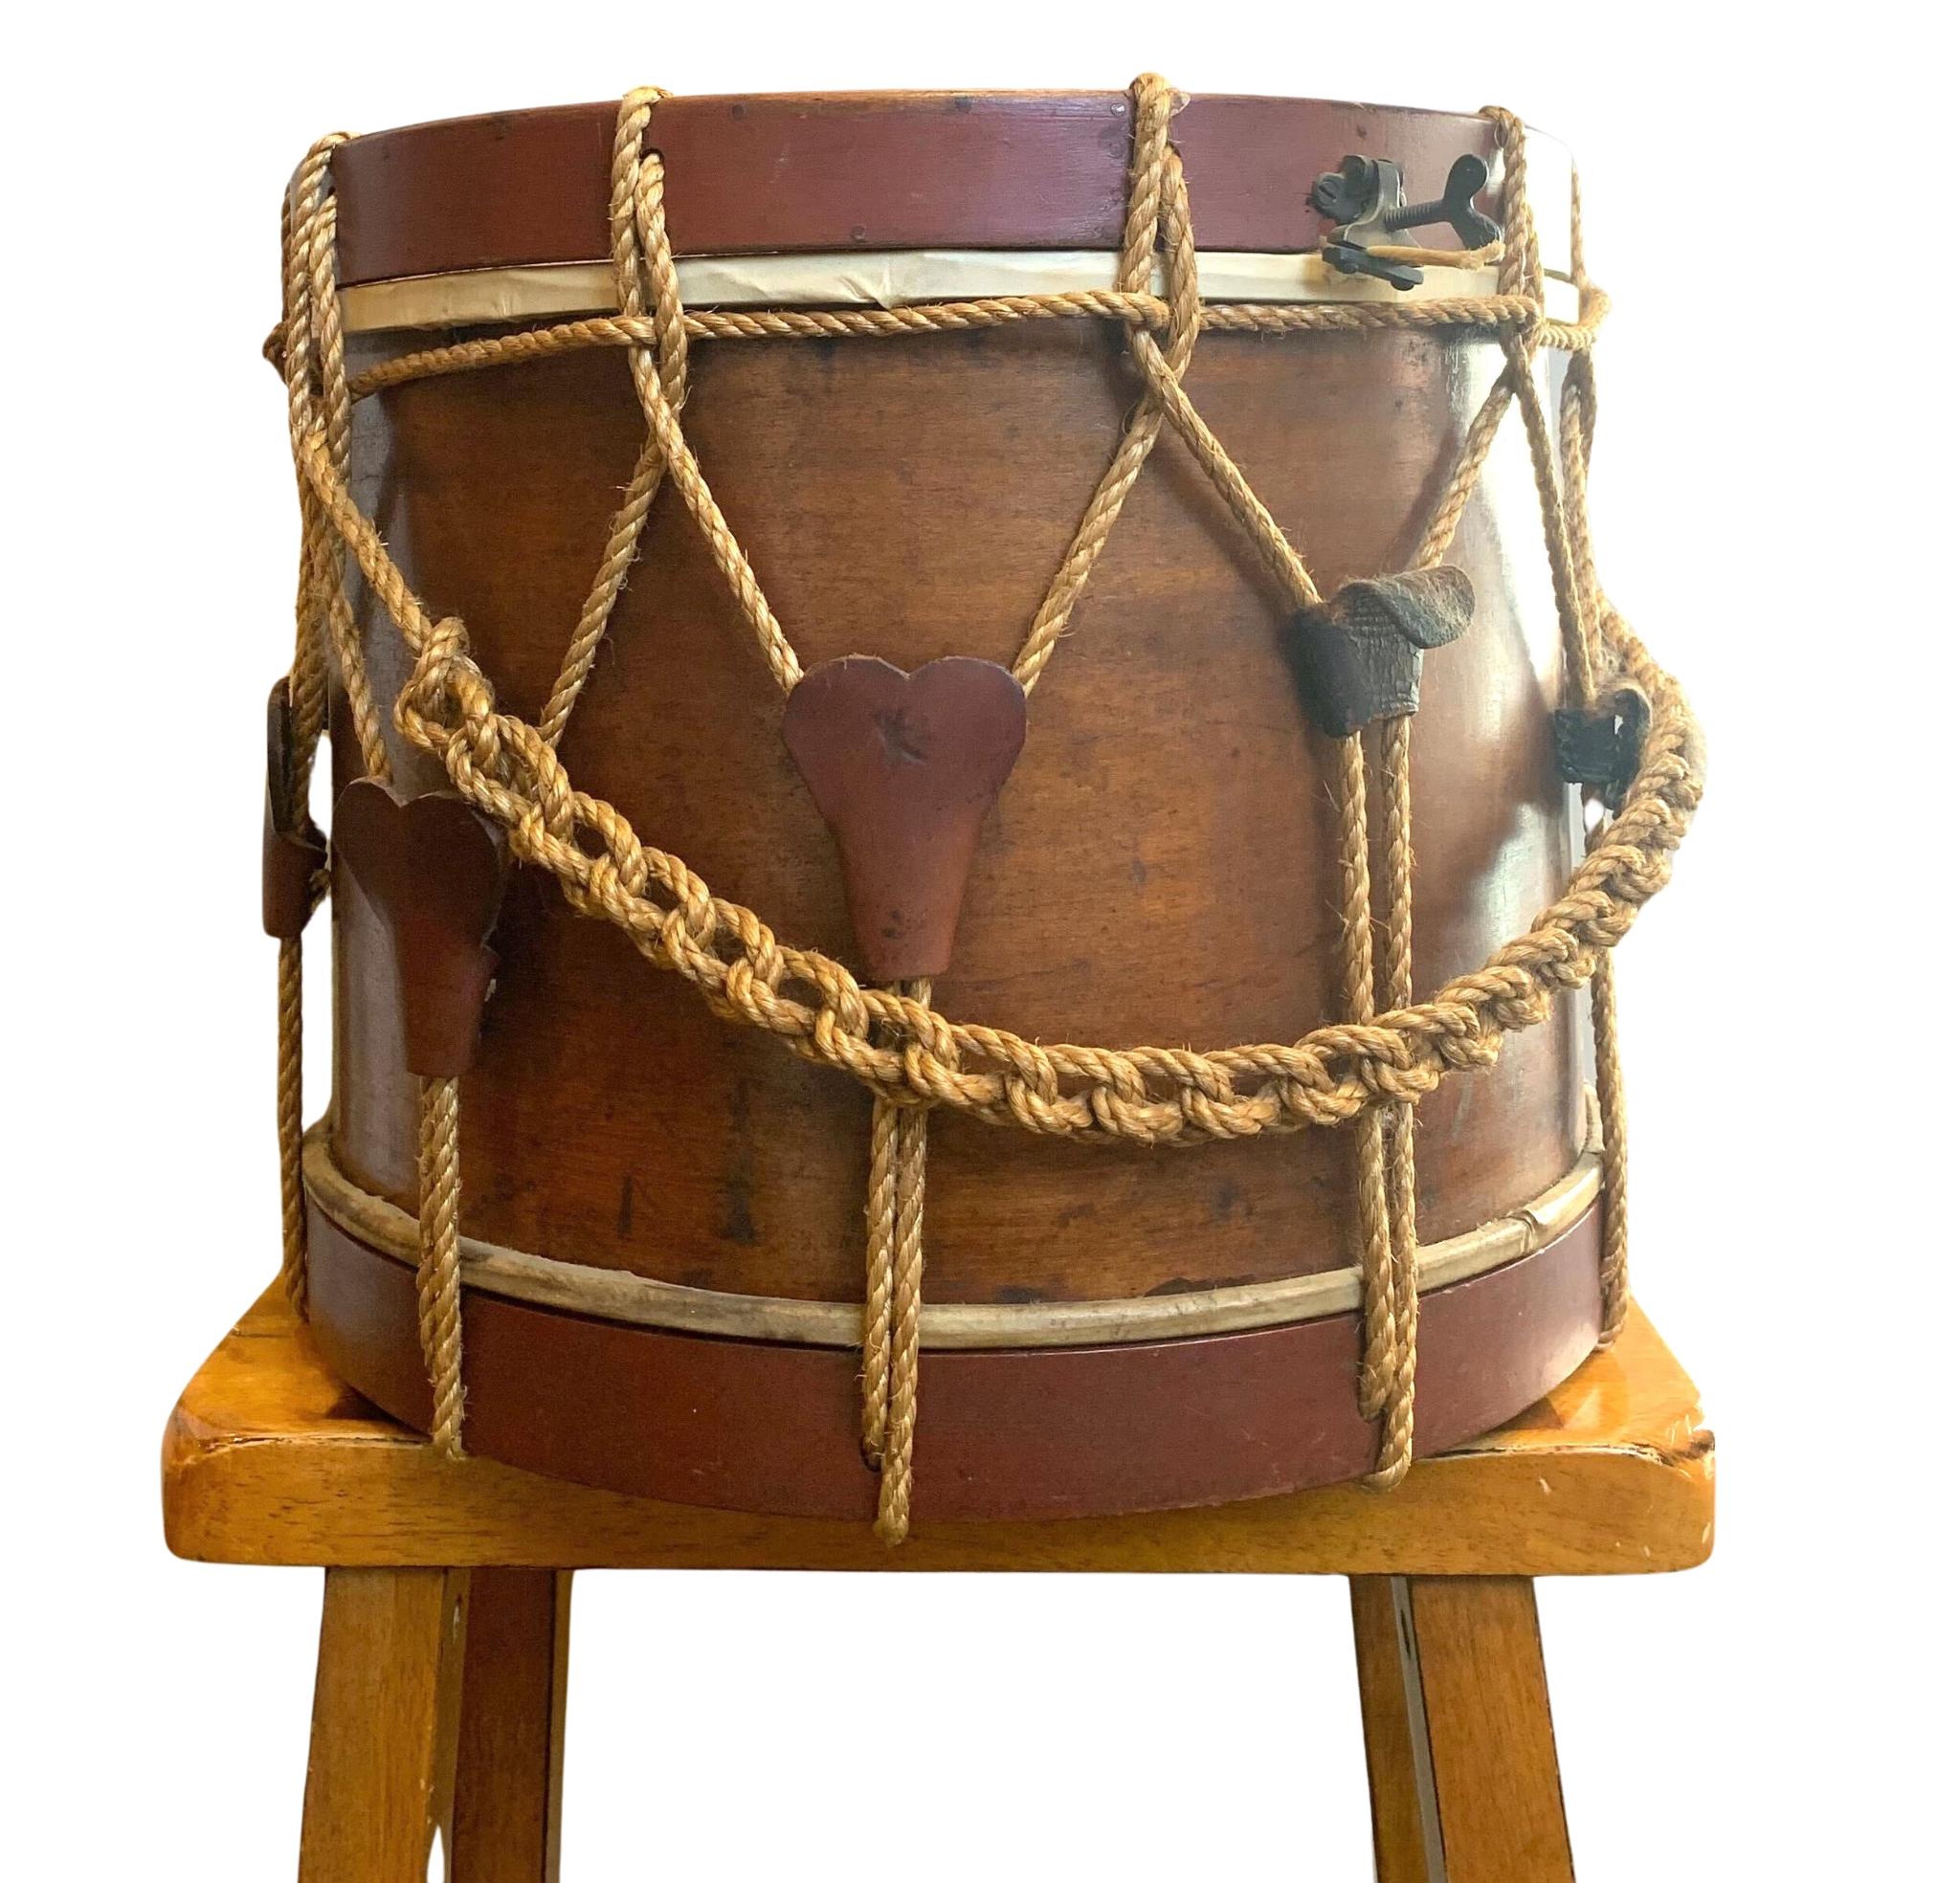 Civil War-Era Side Drum, Made by George Kilbourn, 1859 For Sale 4